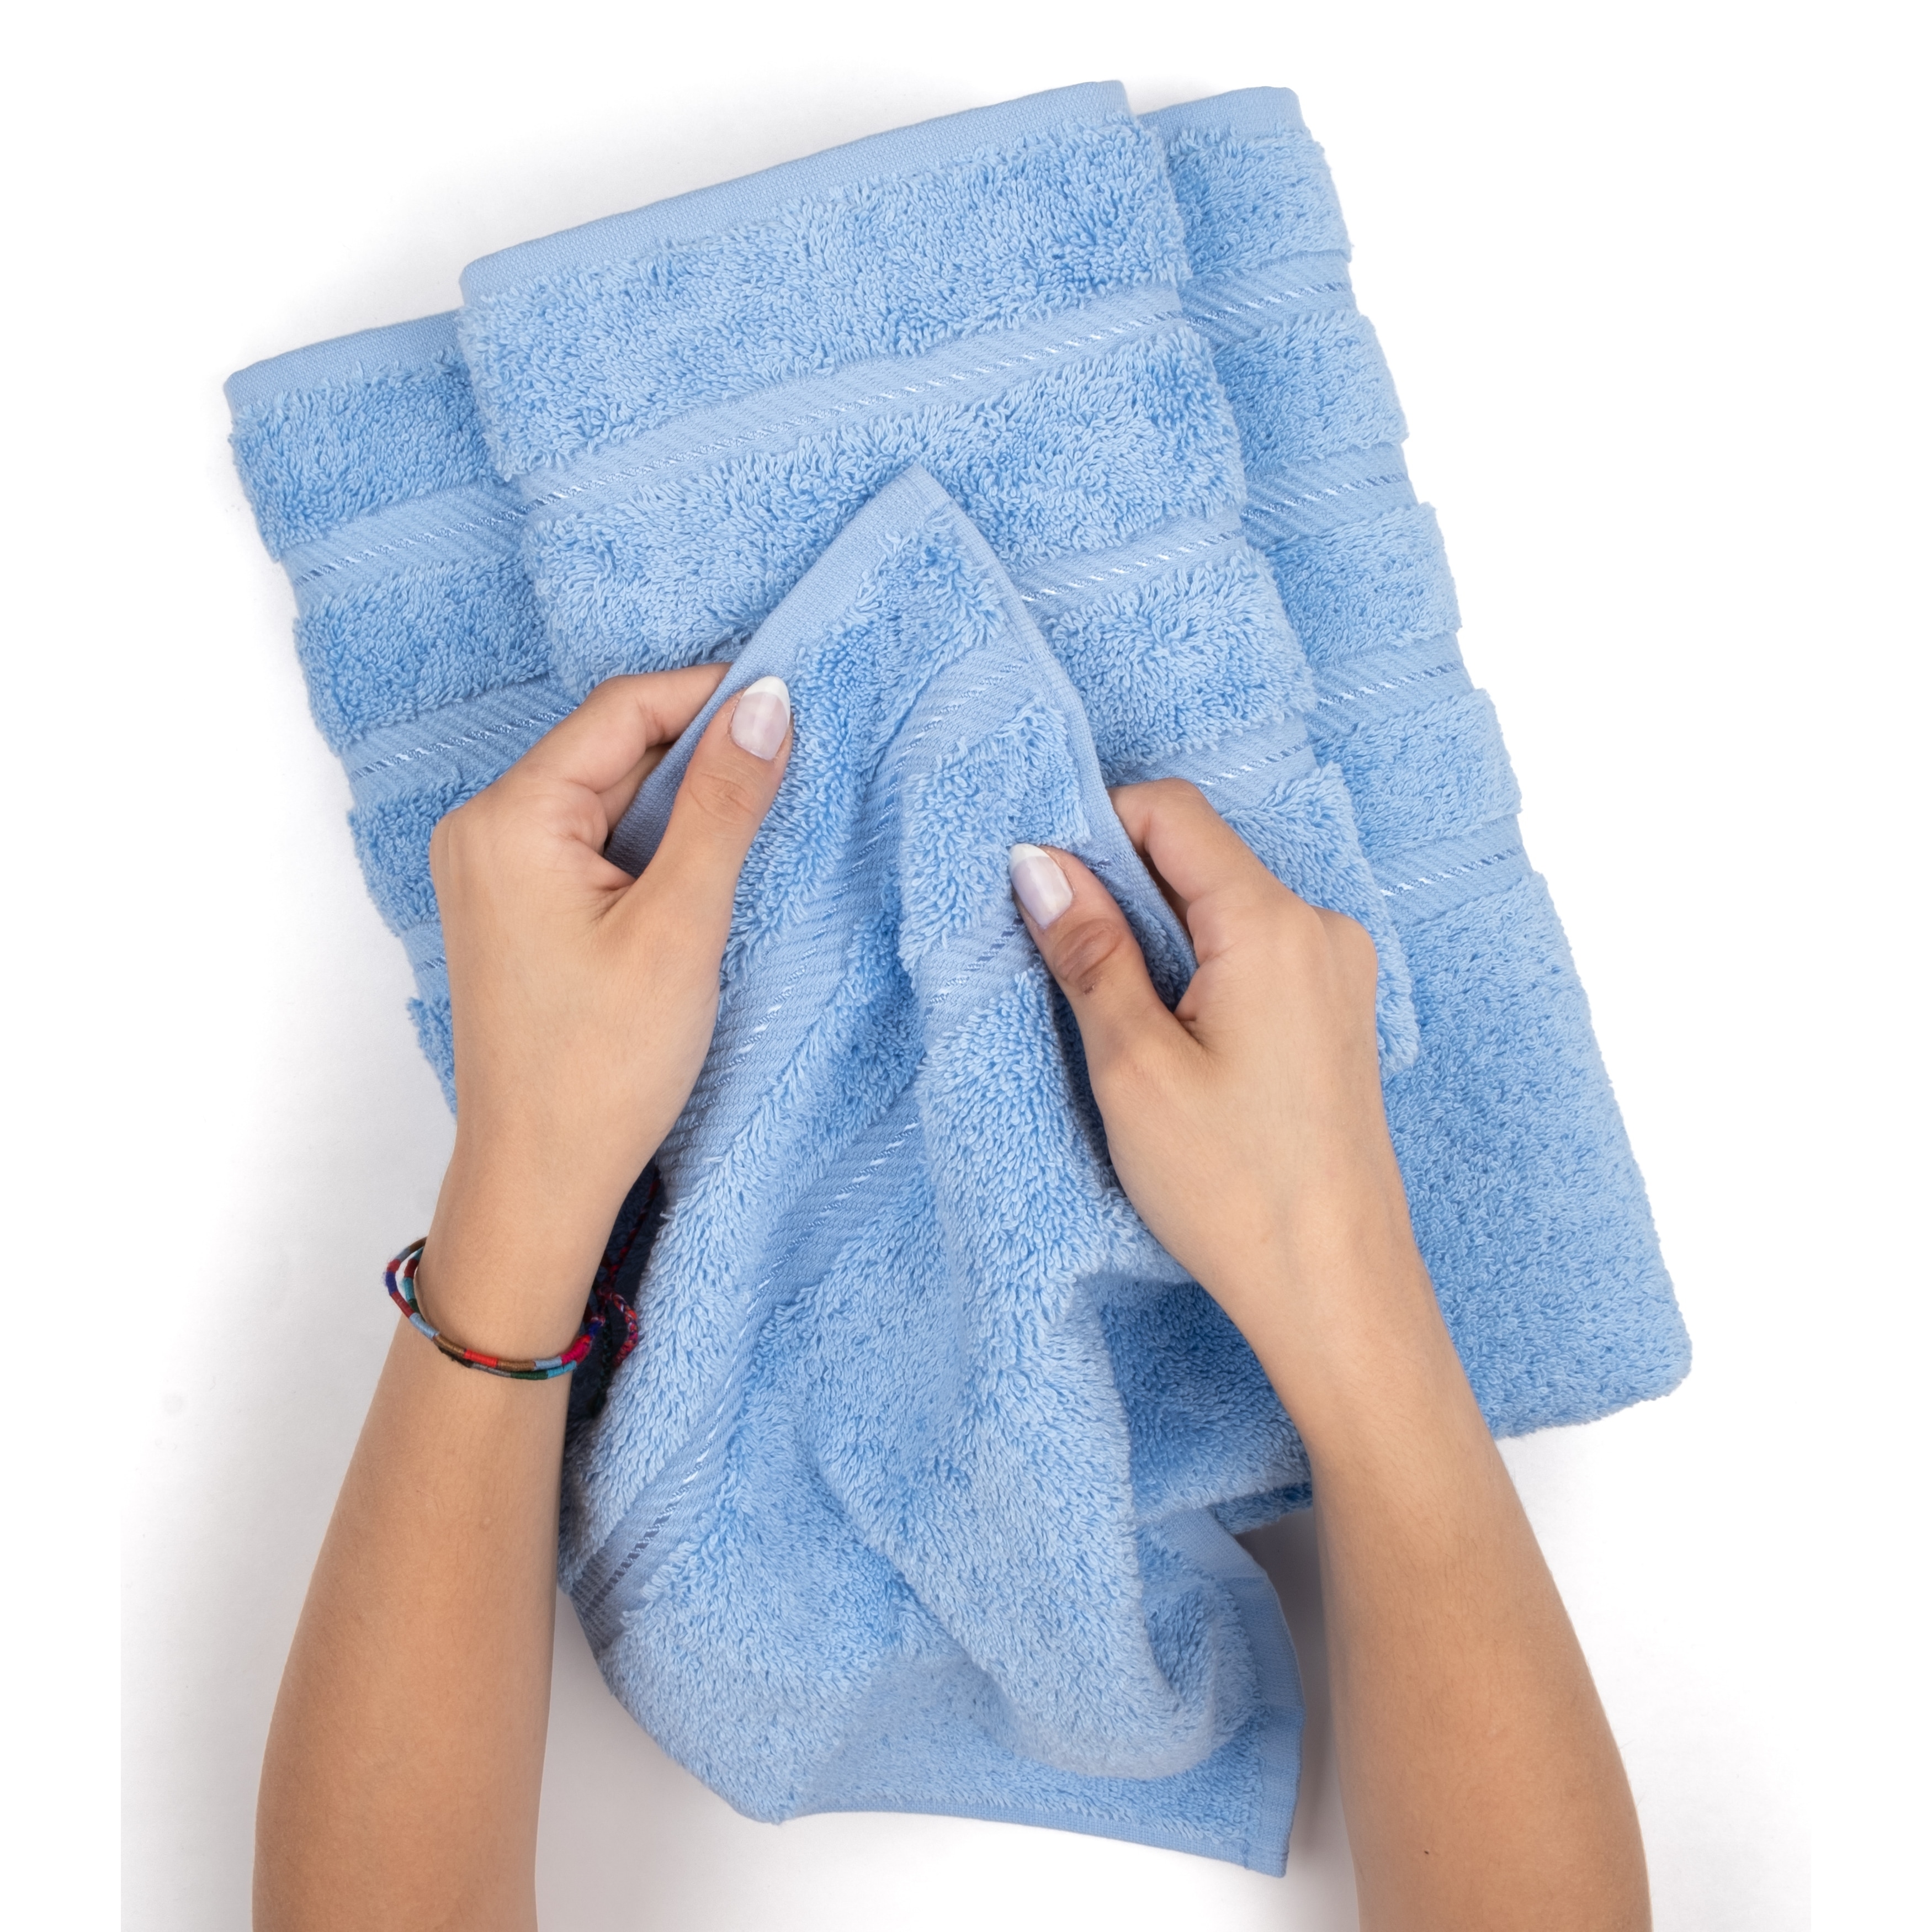 https://ak1.ostkcdn.com/images/products/is/images/direct/c5315296eb4810ea3b30f6474131fccf17e8413f/American-Soft-Linen-100%25-Genuine-Turkish-Cotton-Large-Jumbo-Bath-Towel-35x70-Premium-%26-Luxury-Towels.jpg